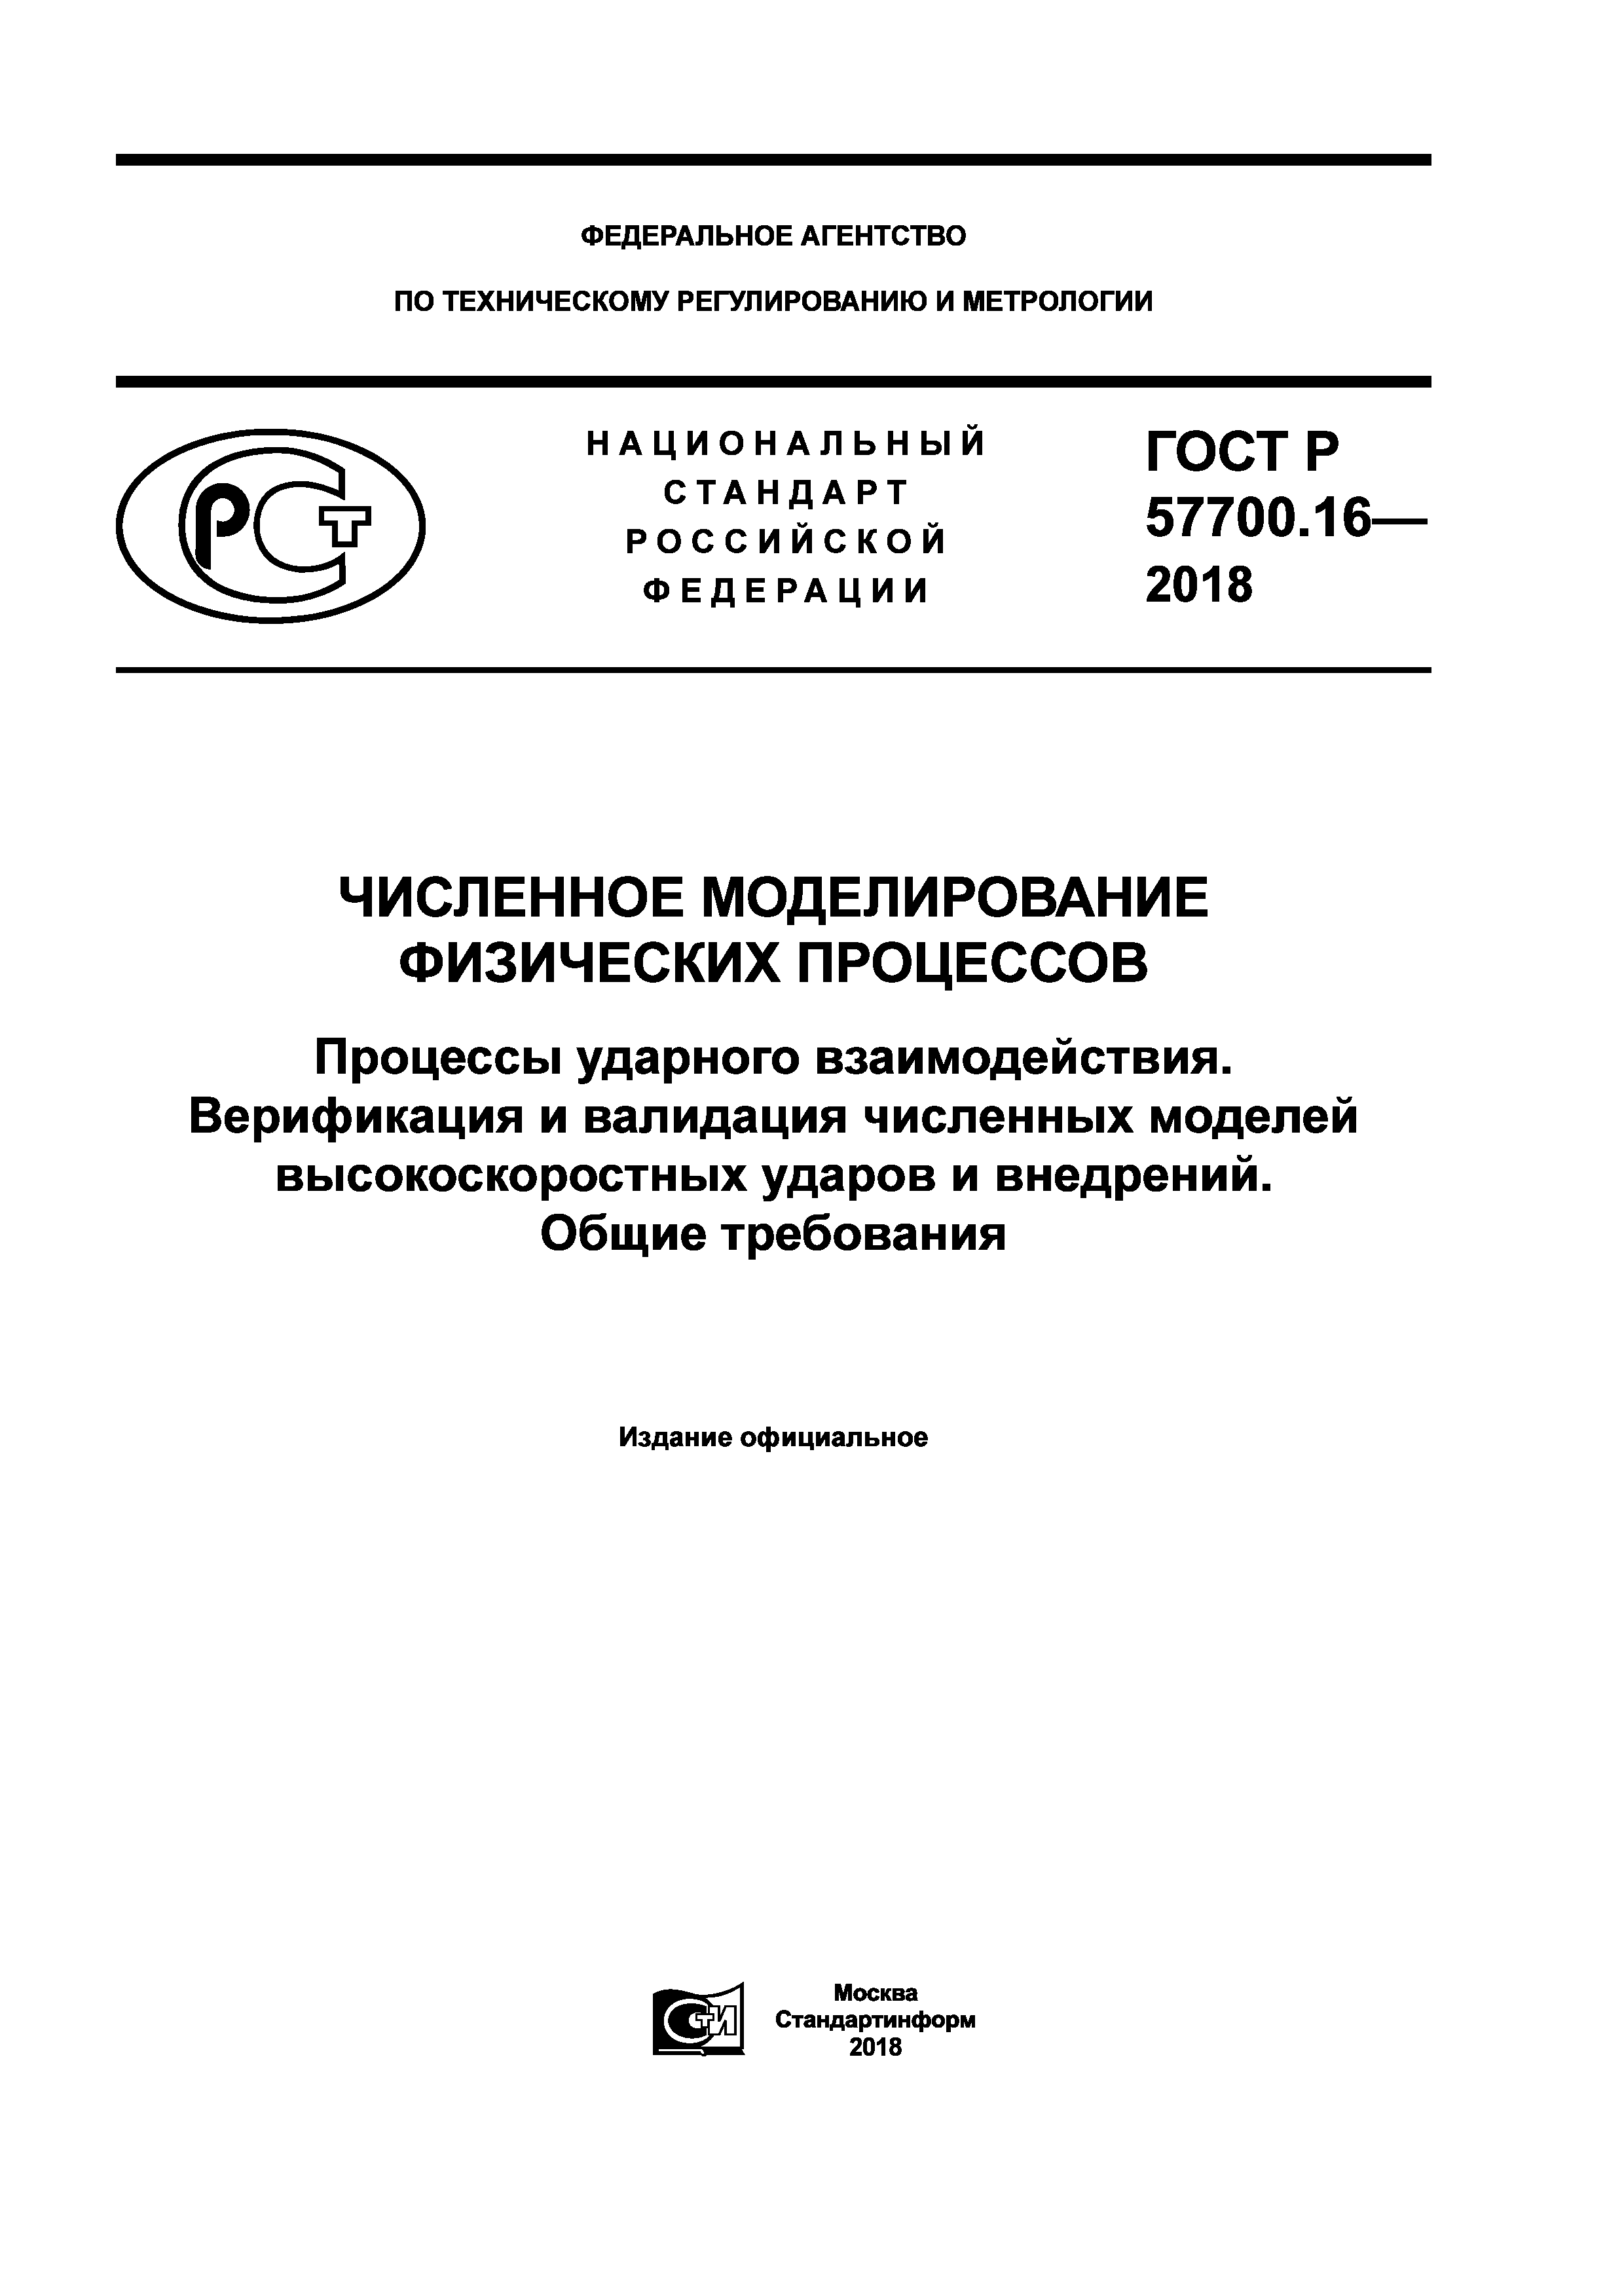 ГОСТ Р 57700.16-2018